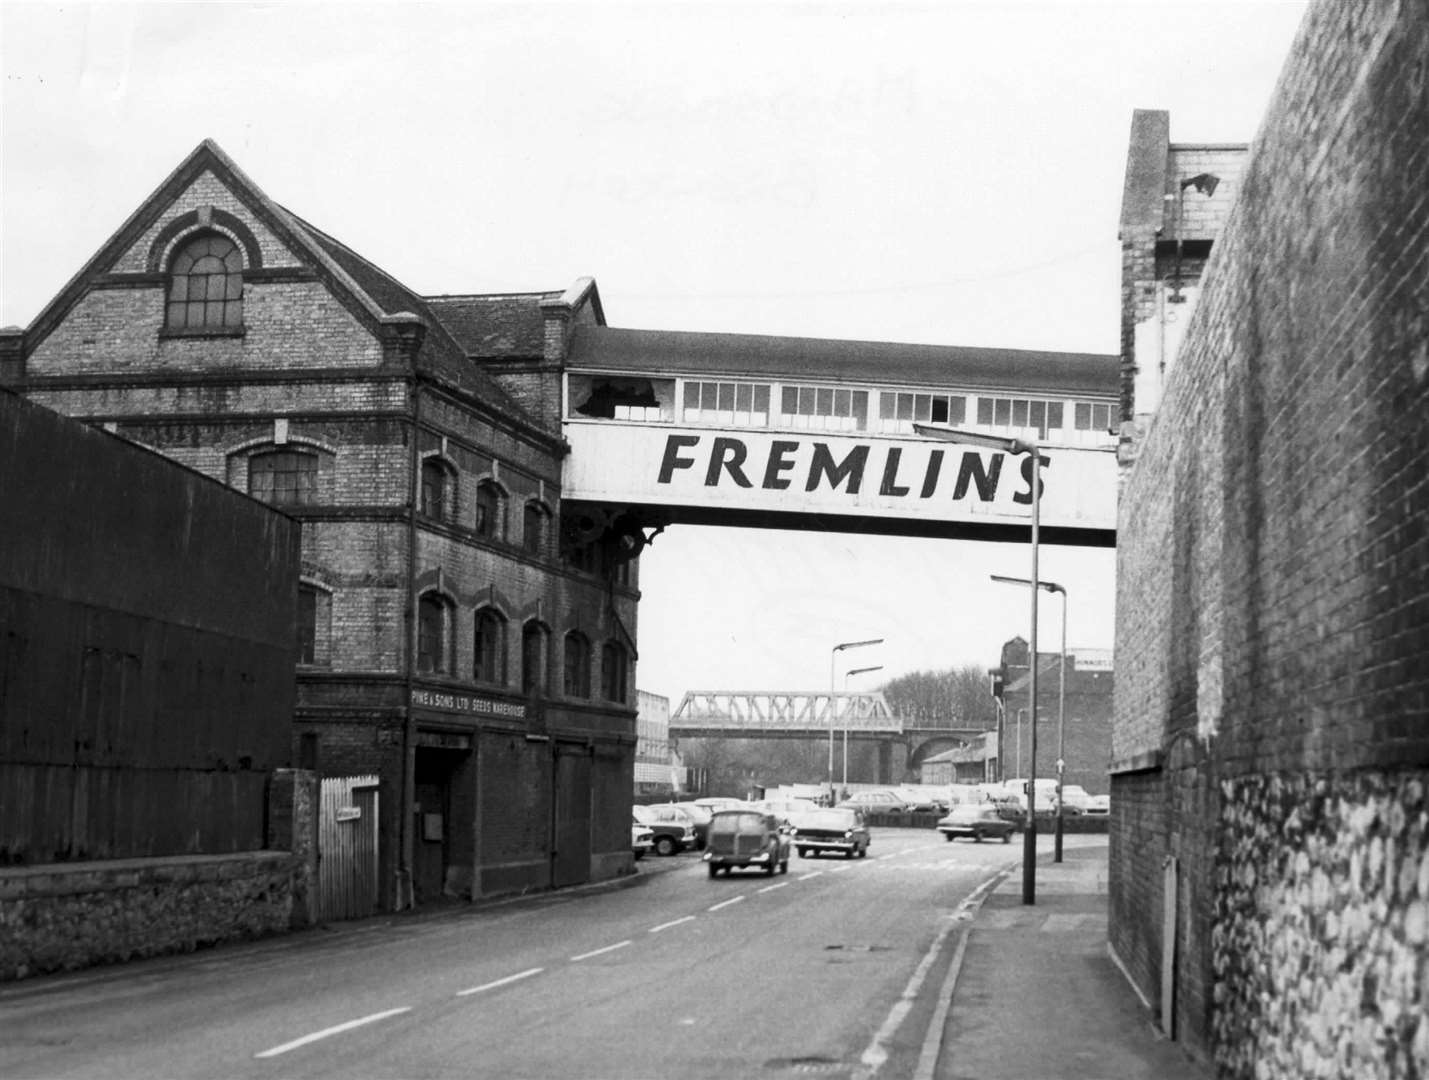 Fremlins Brewery, Maidstone.